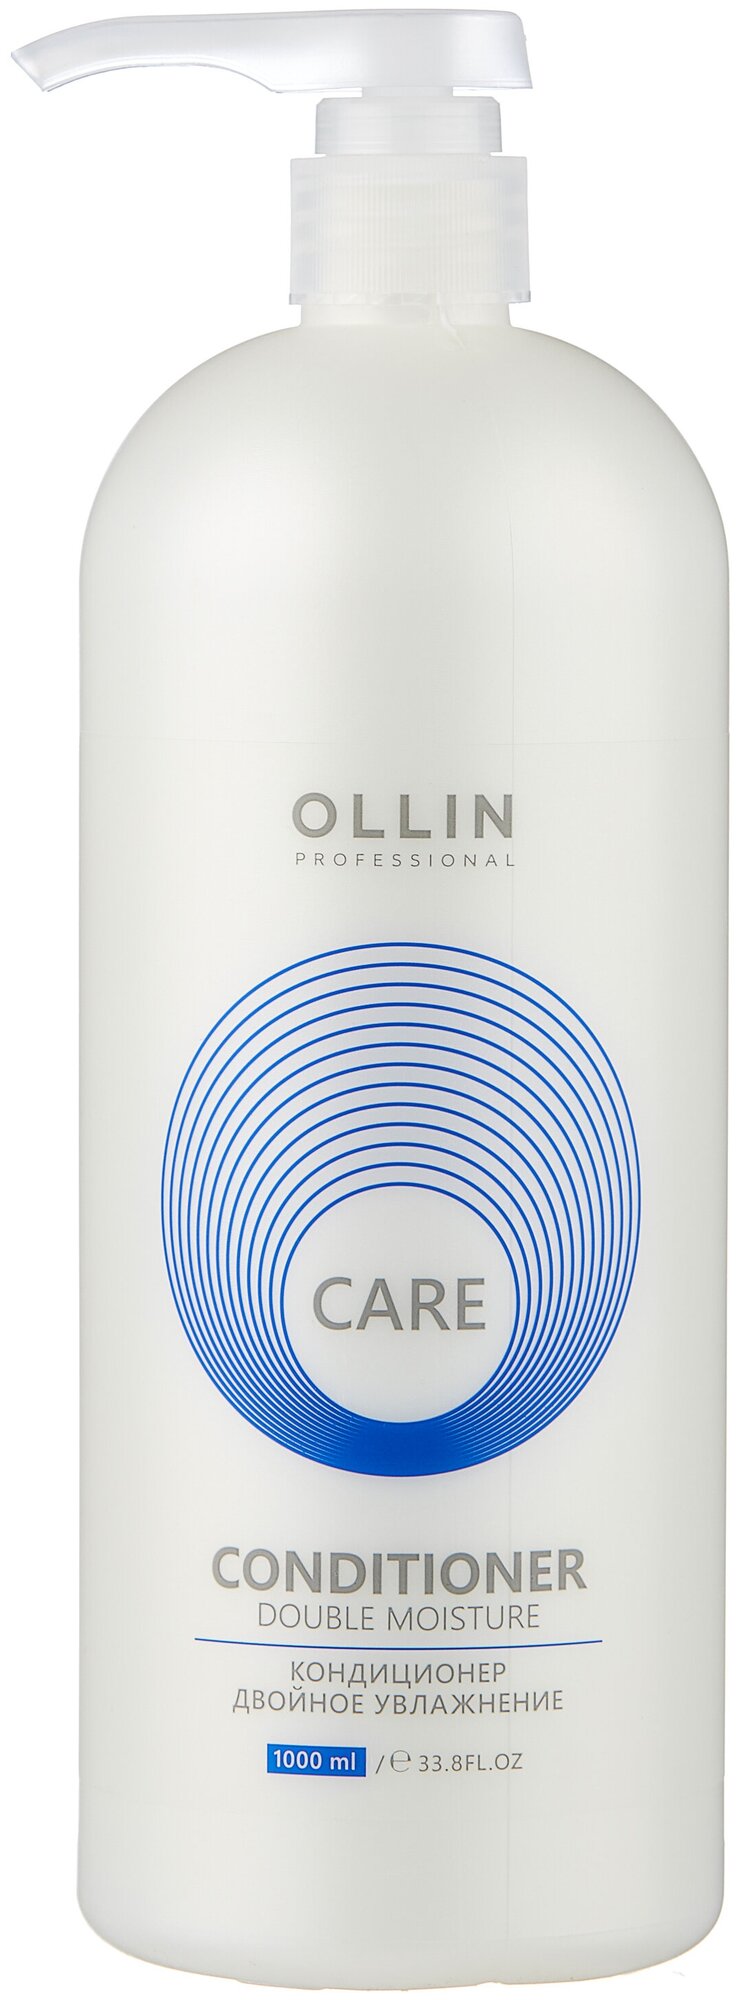 OLLIN Professional кондиционер Care Double Moisture